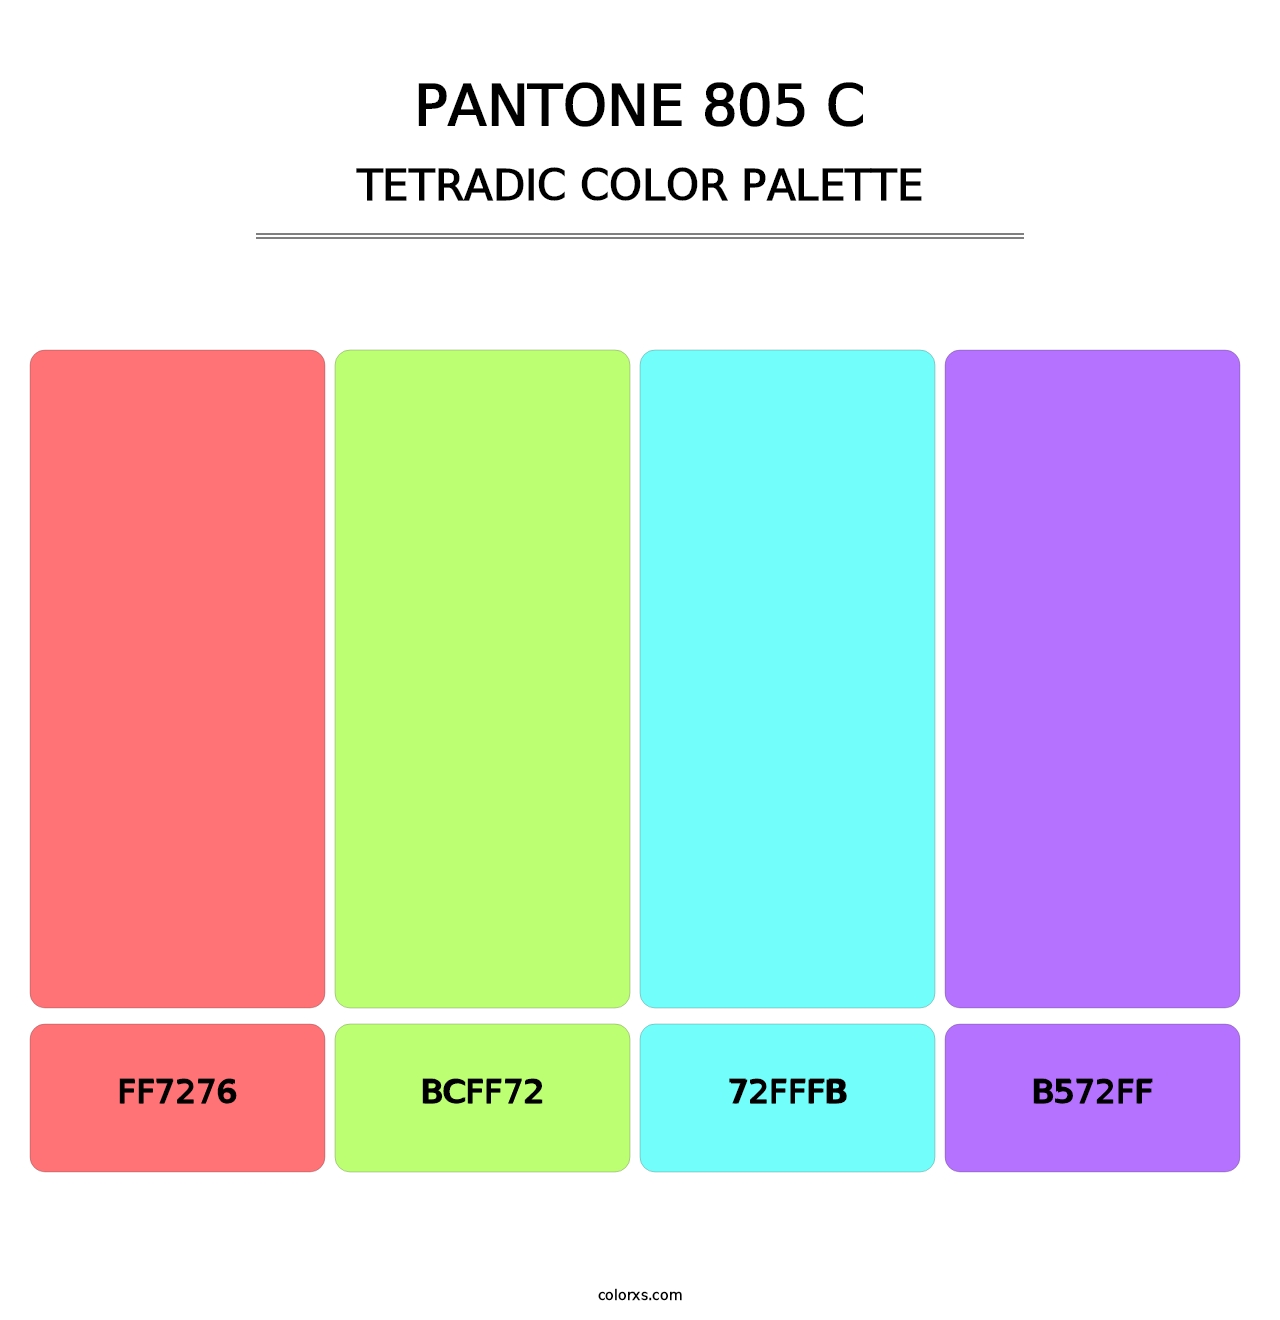 PANTONE 805 C - Tetradic Color Palette